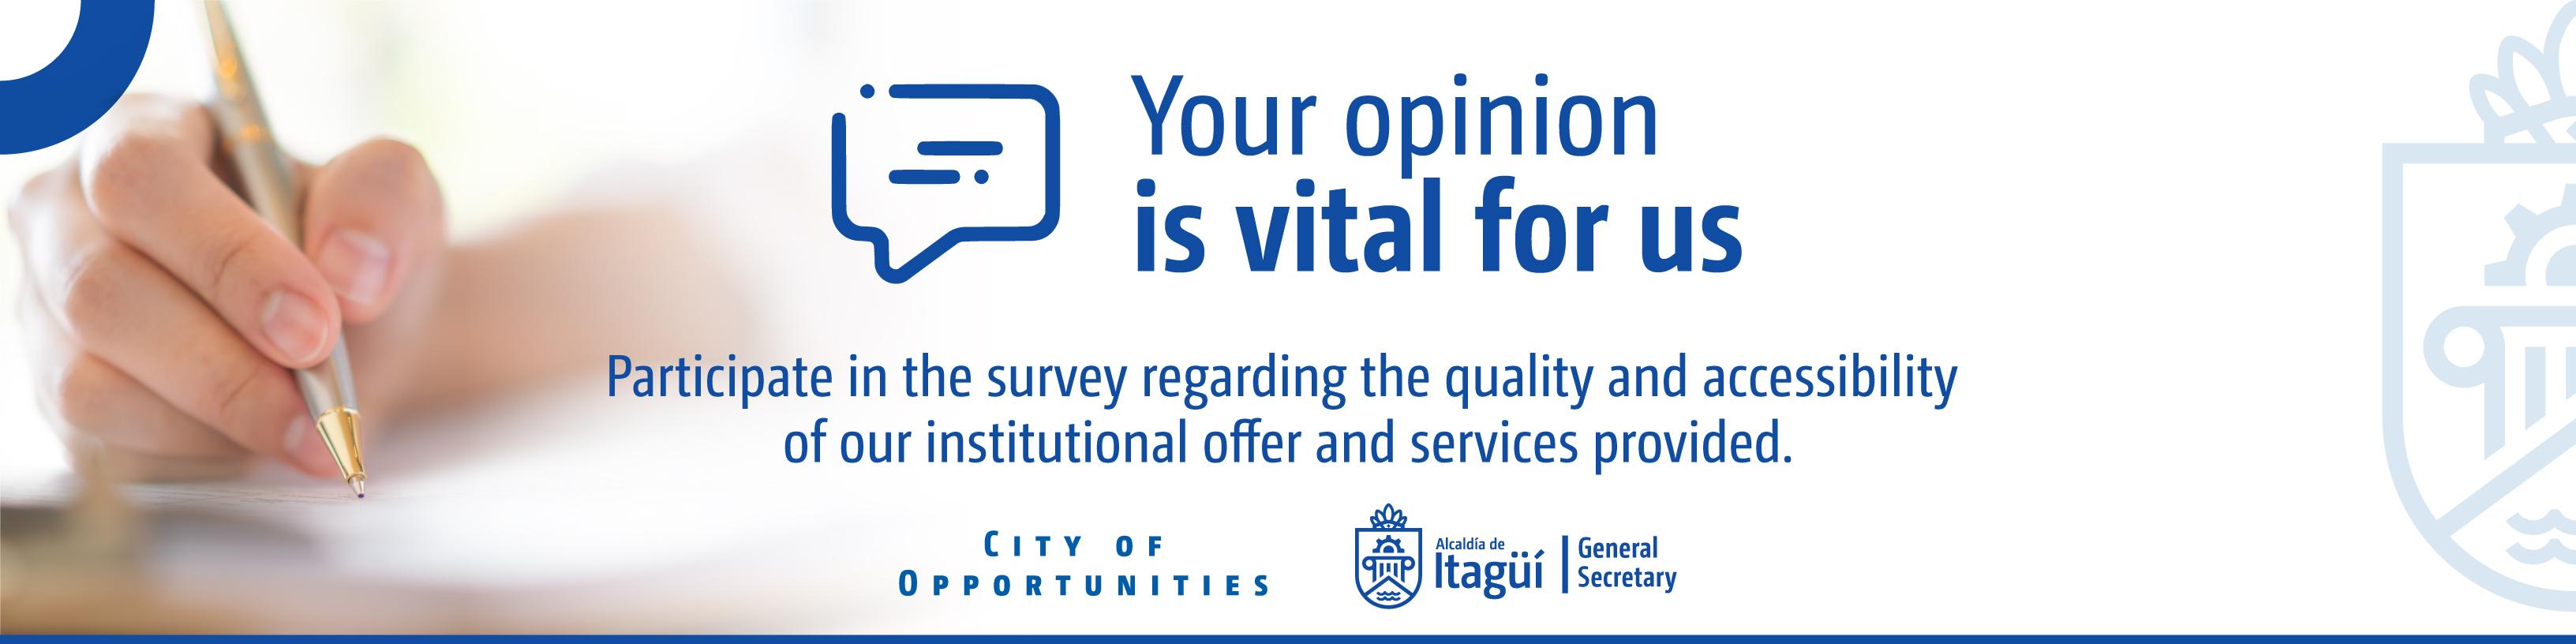 Banner survey regarding the institutional offer